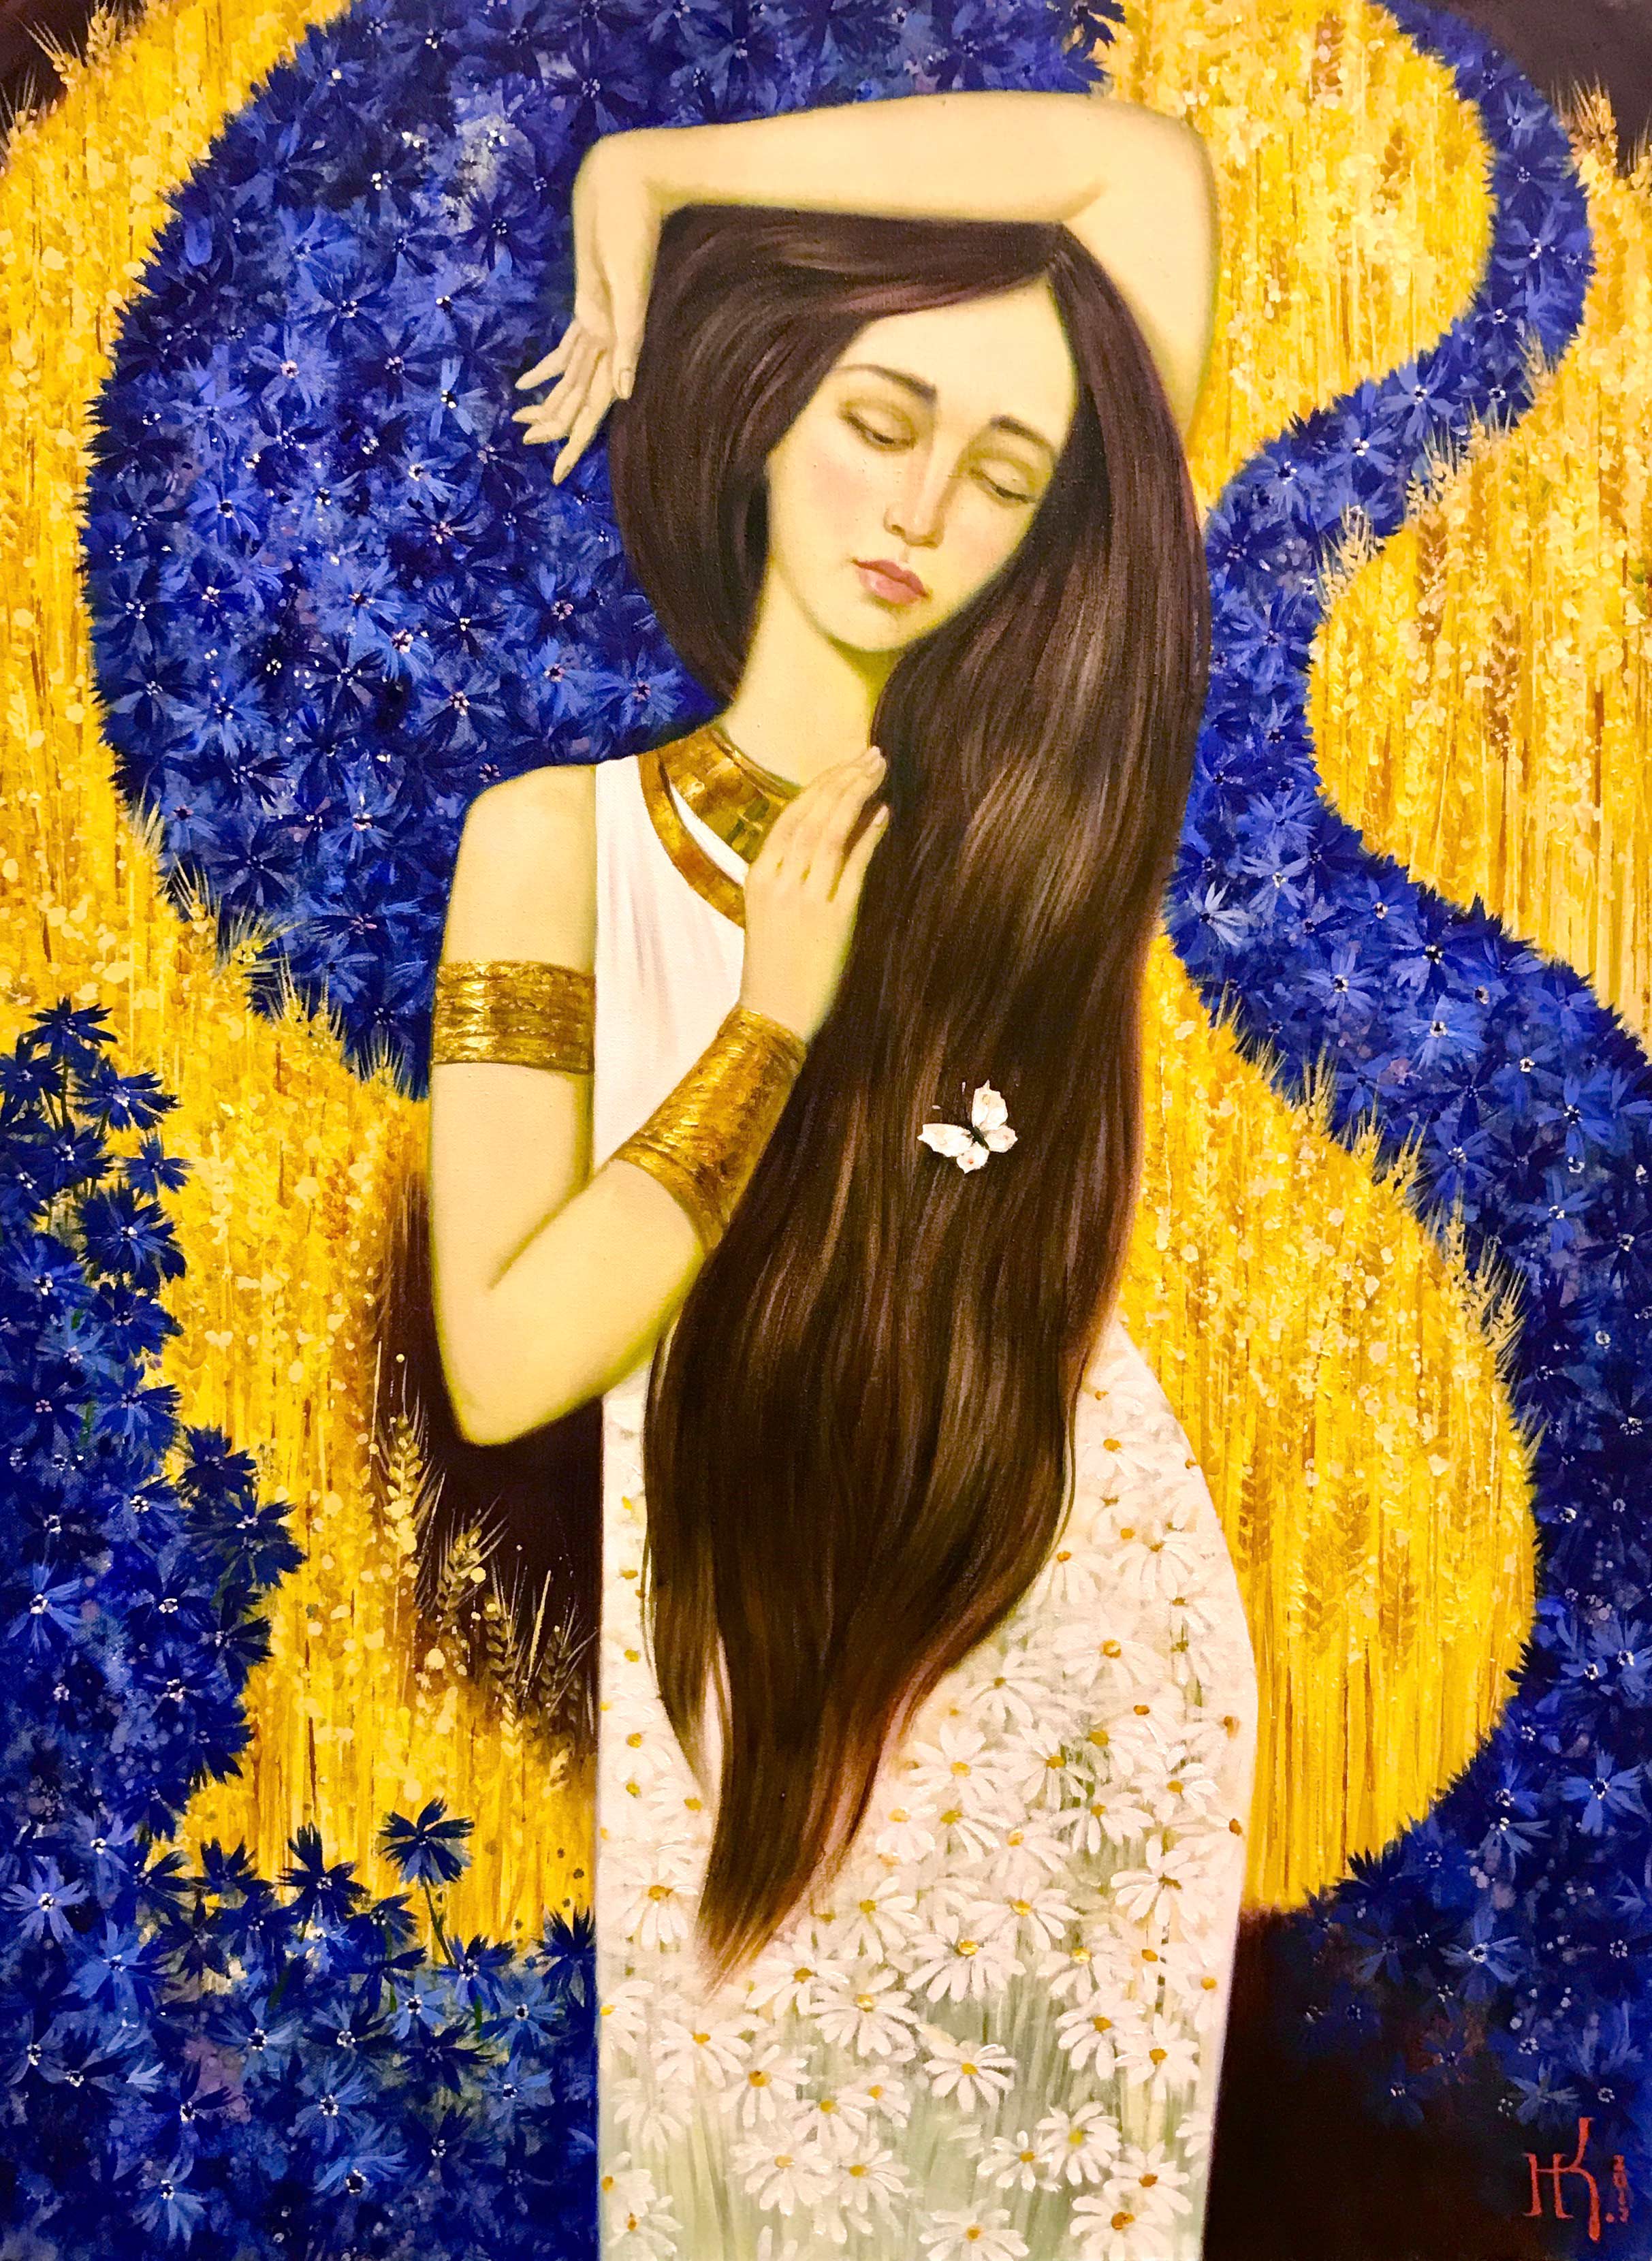 Blue Cornflowers - 1, Natalya Klimova, Buy the painting Oil